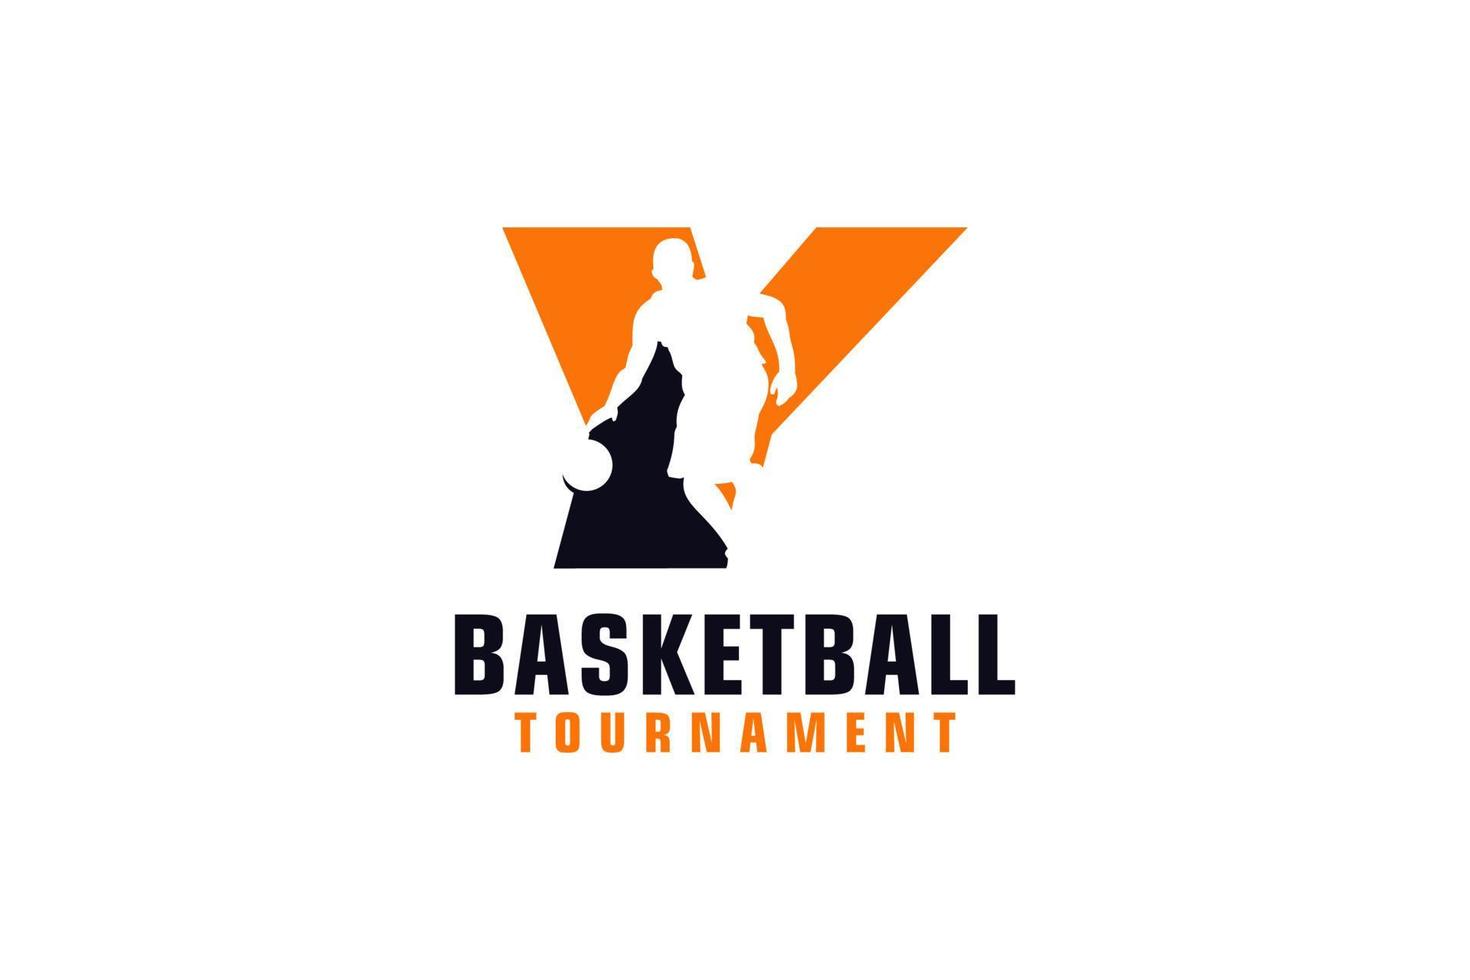 letra y com design de logotipo de basquete. elementos de modelo de design vetorial para equipe esportiva ou identidade corporativa. vetor